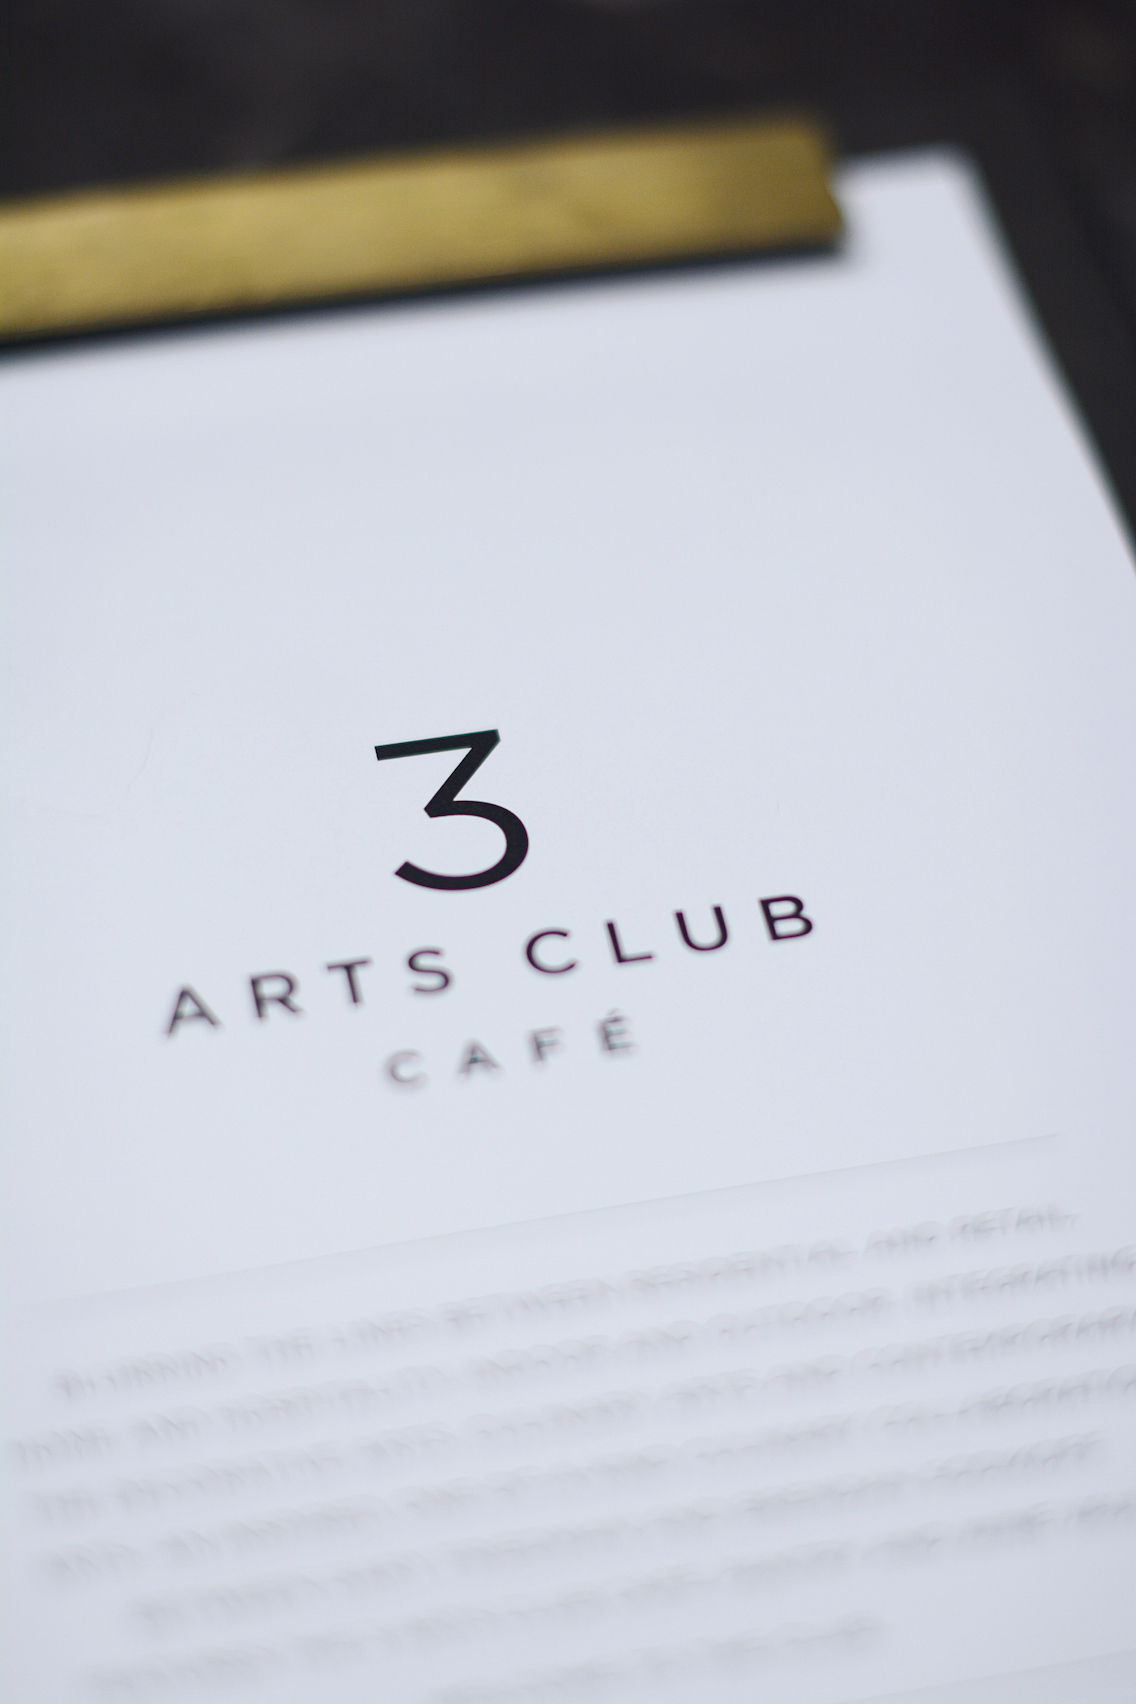 Three Arts Club Chicago 20